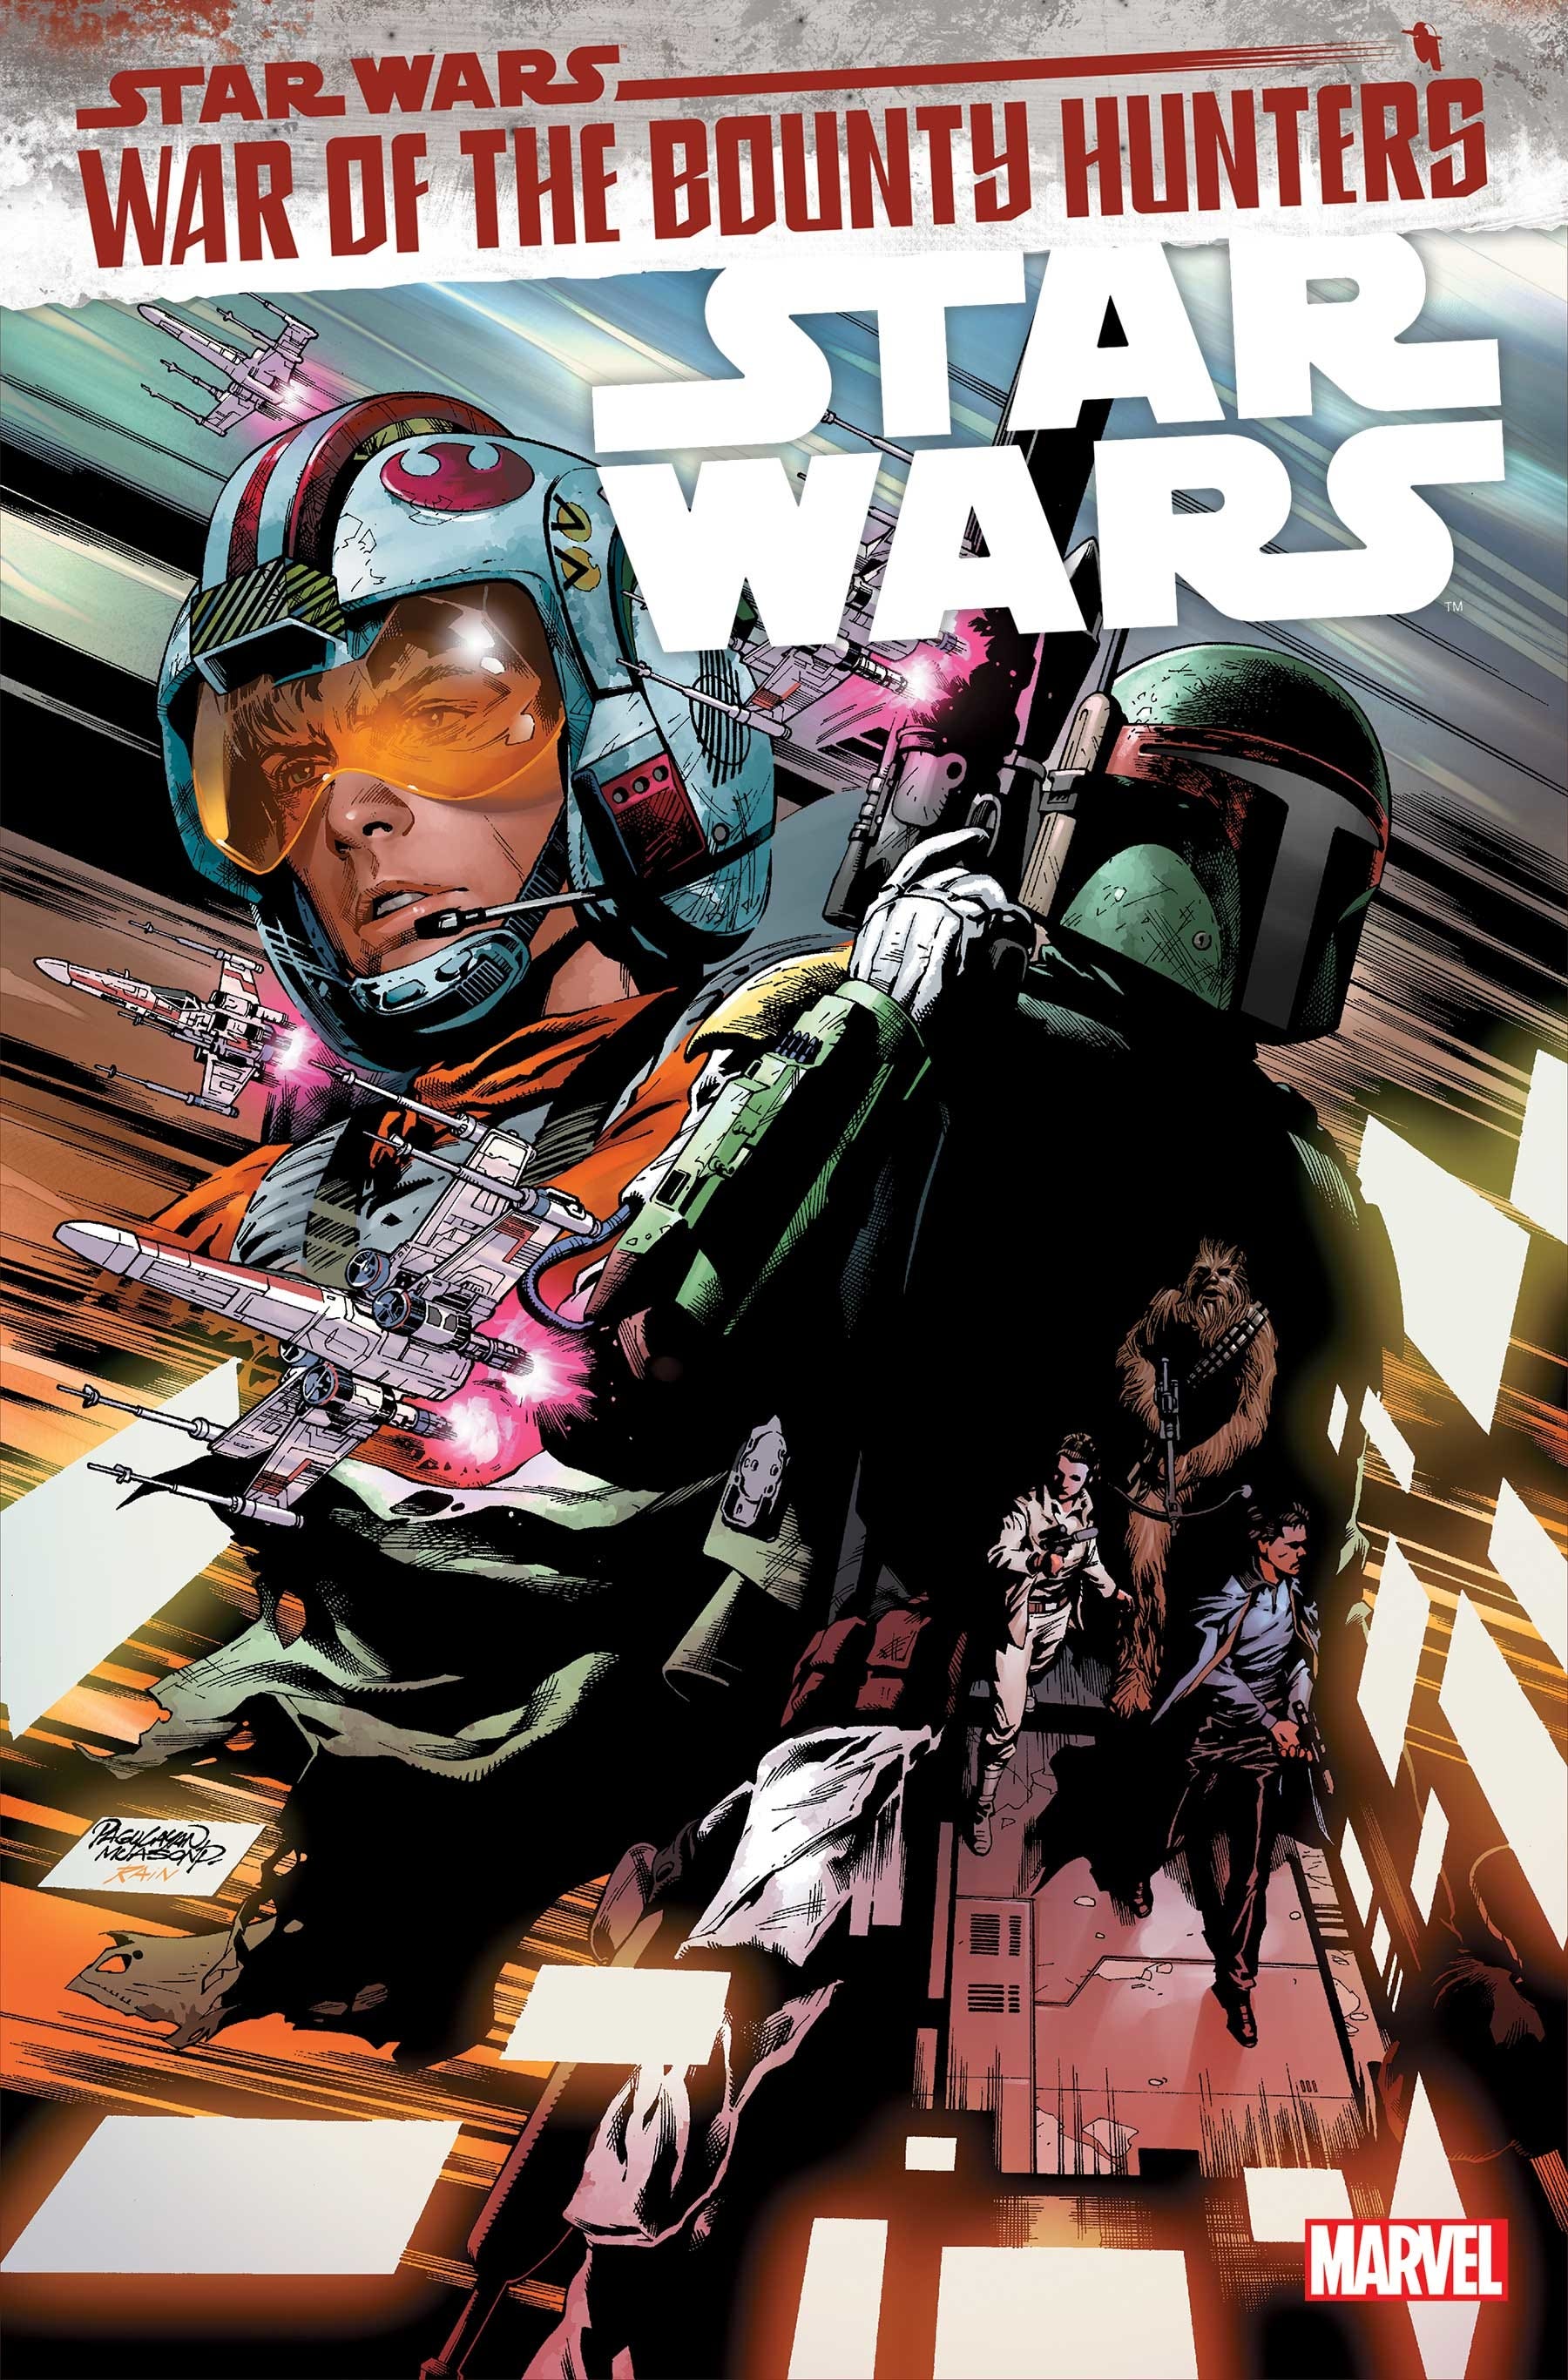 Star Wars #15 (War of the Bounty Hunters)